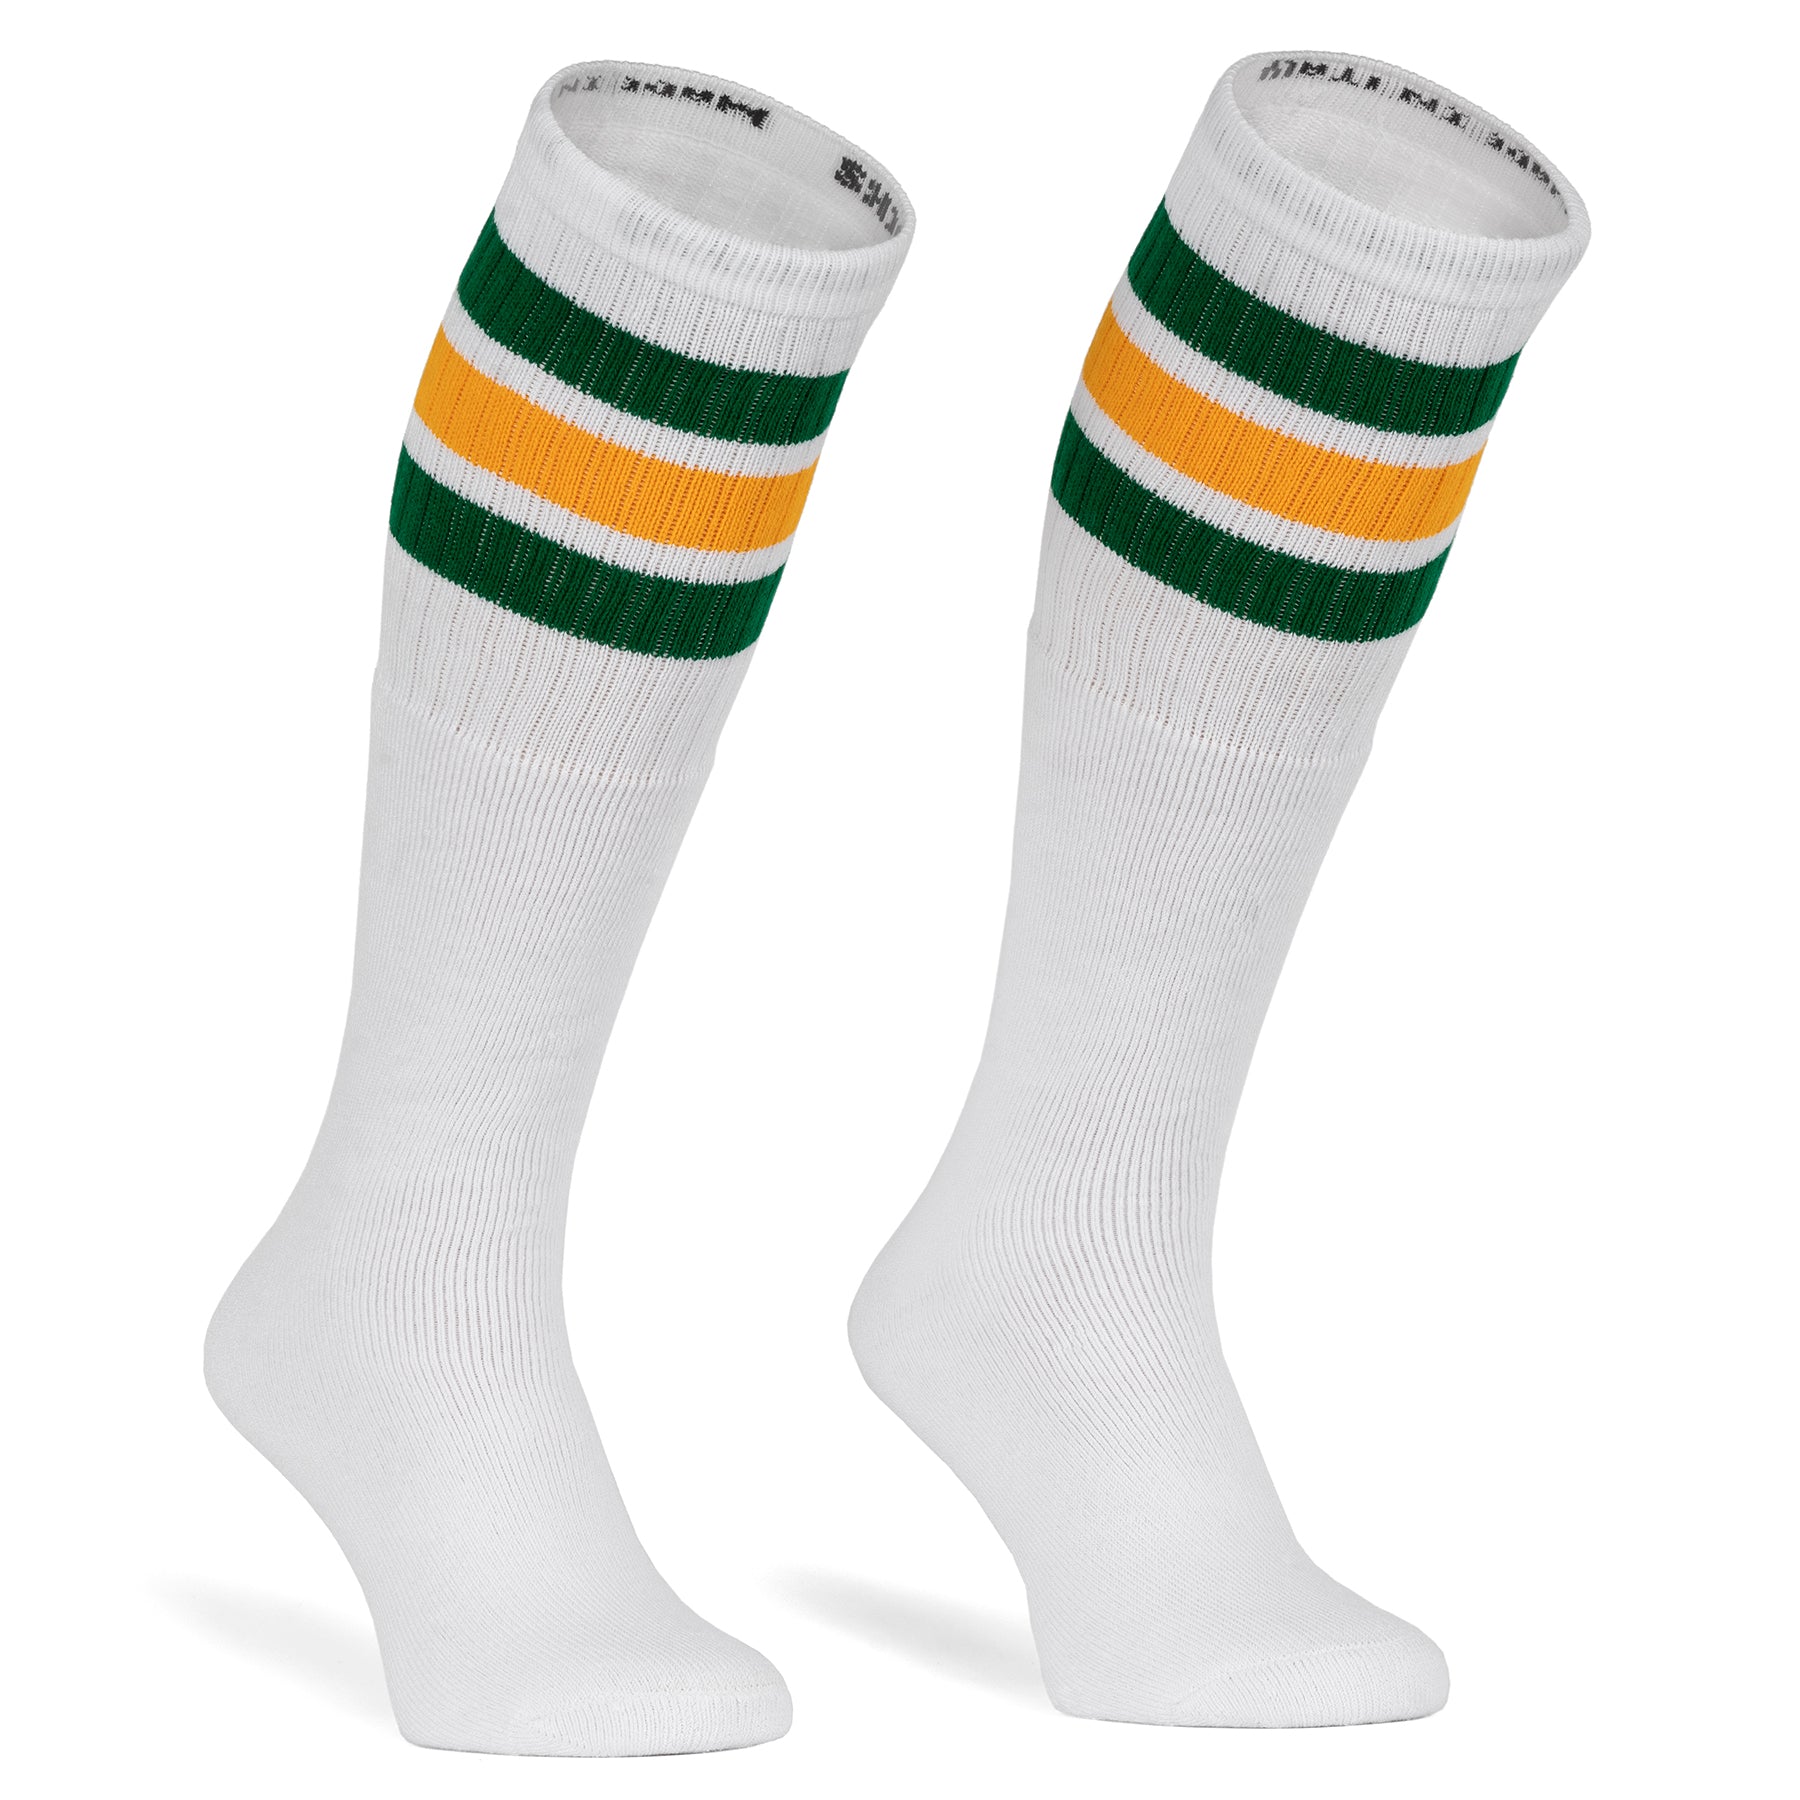 Skatersocks 22 Inch Knee High Tube Socks white / Green and yellow striped - Phoenix 212 Clothing